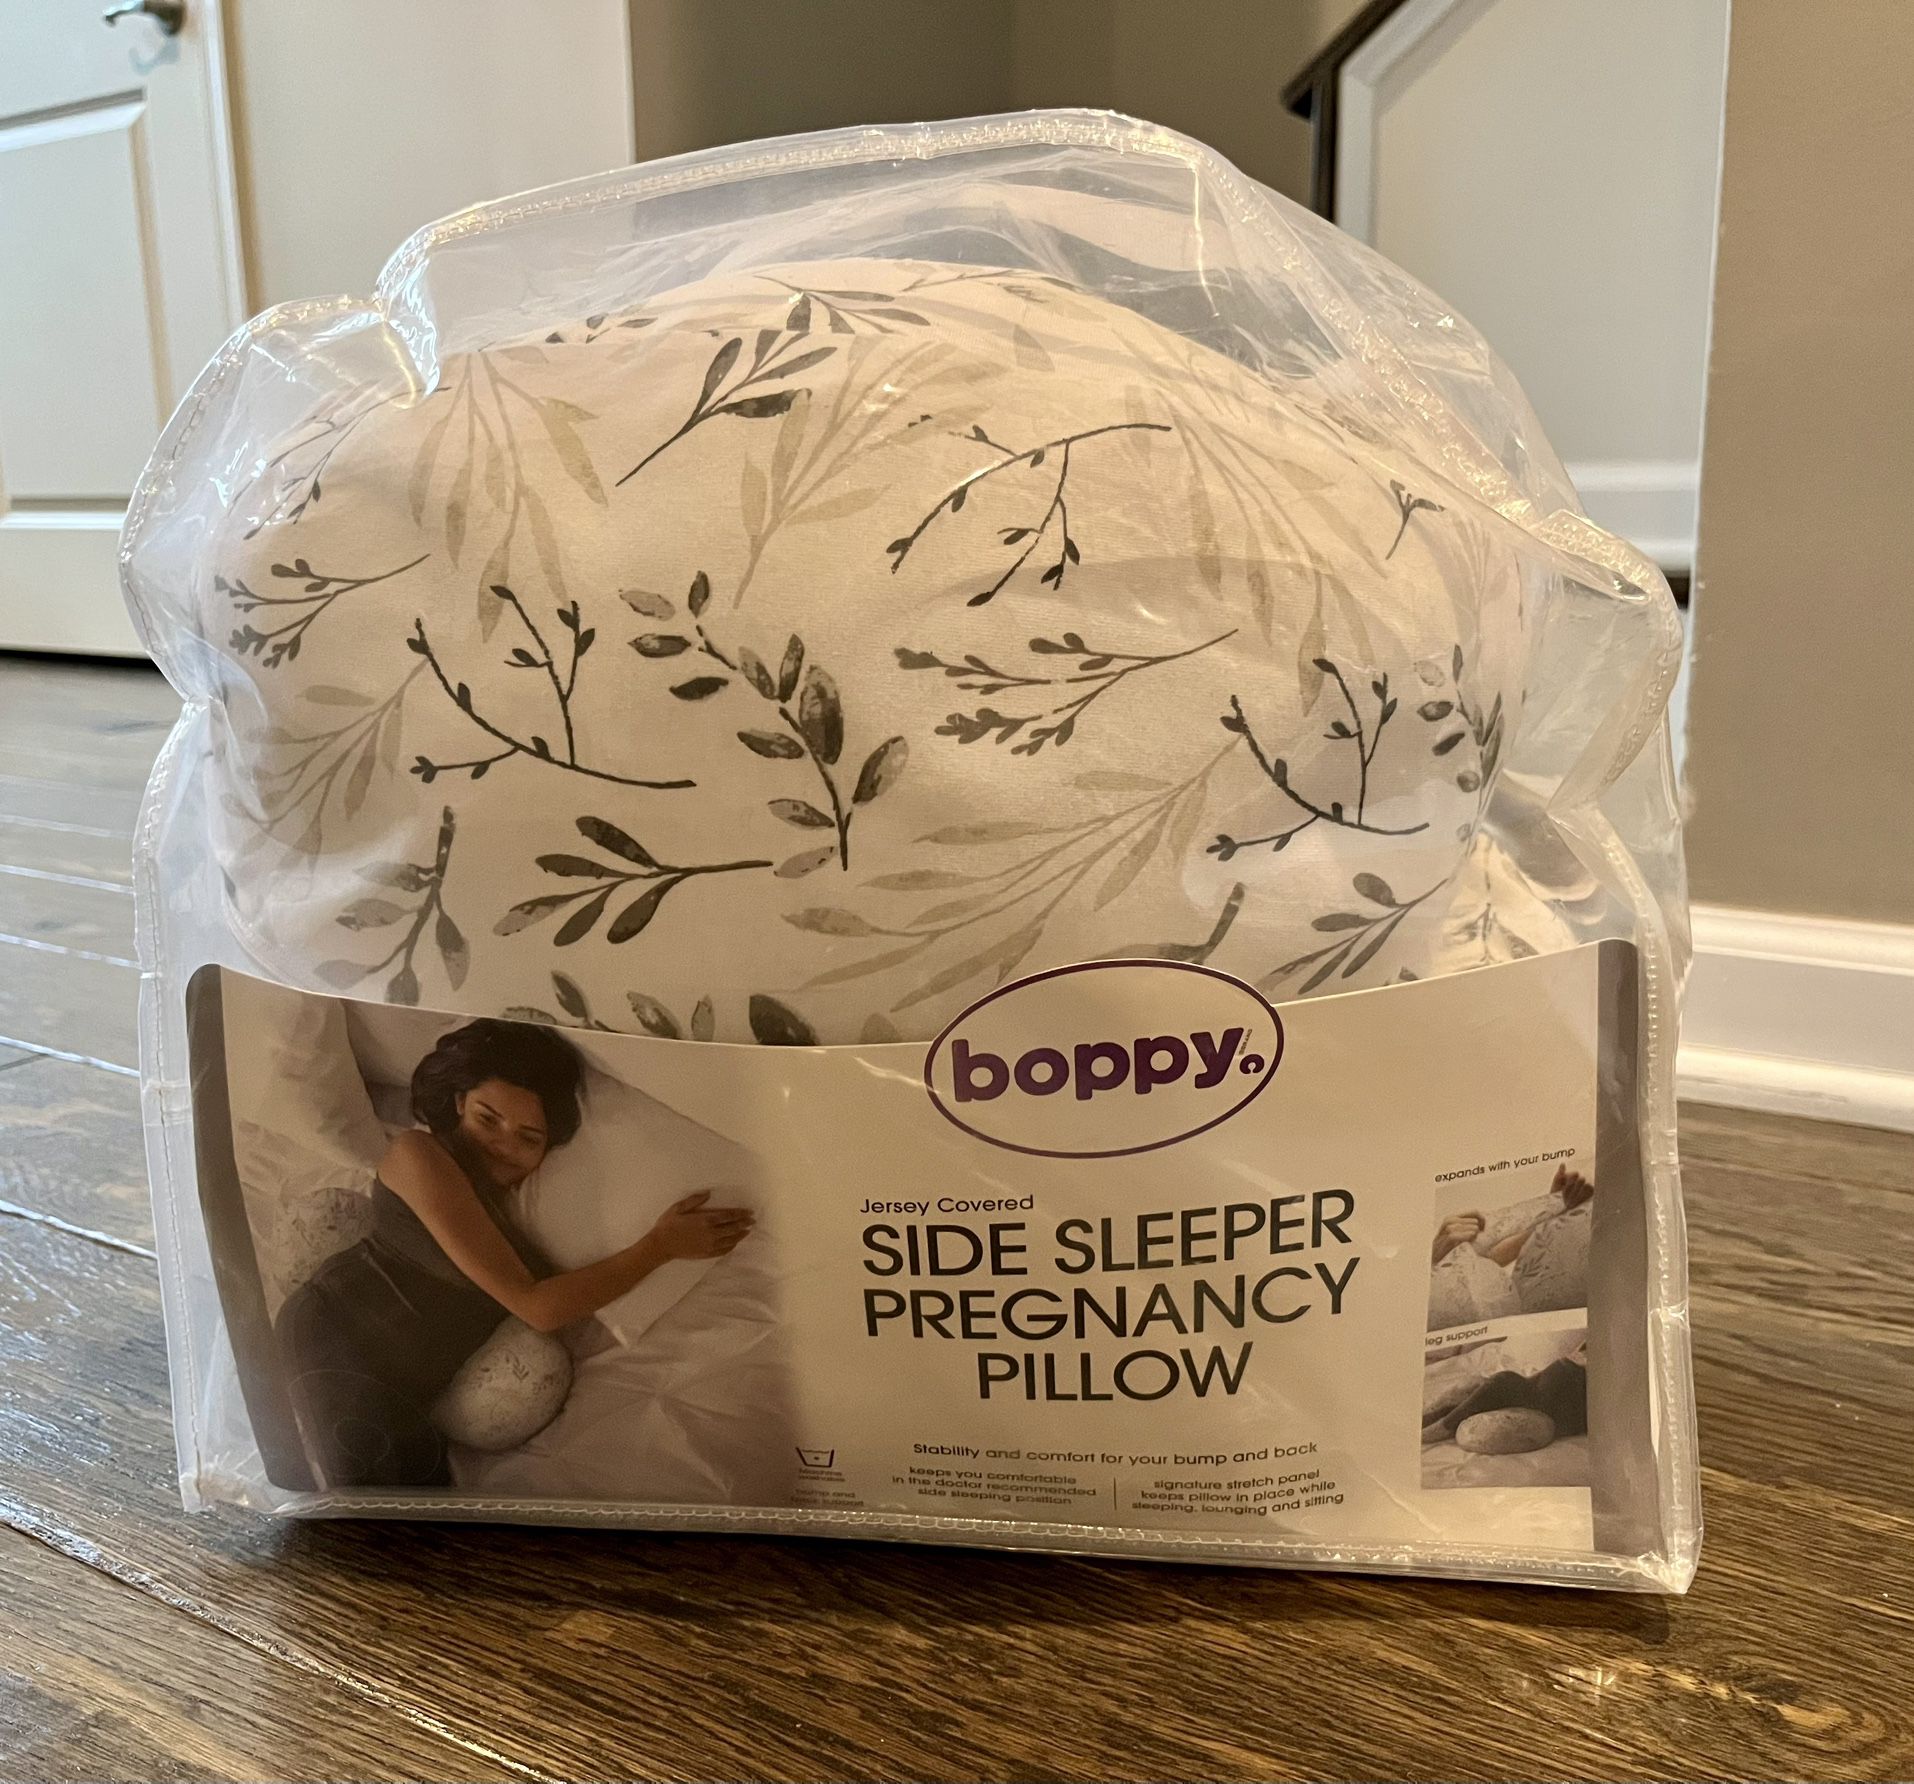 Boppy Side Sleeper Pregnancy Pillow